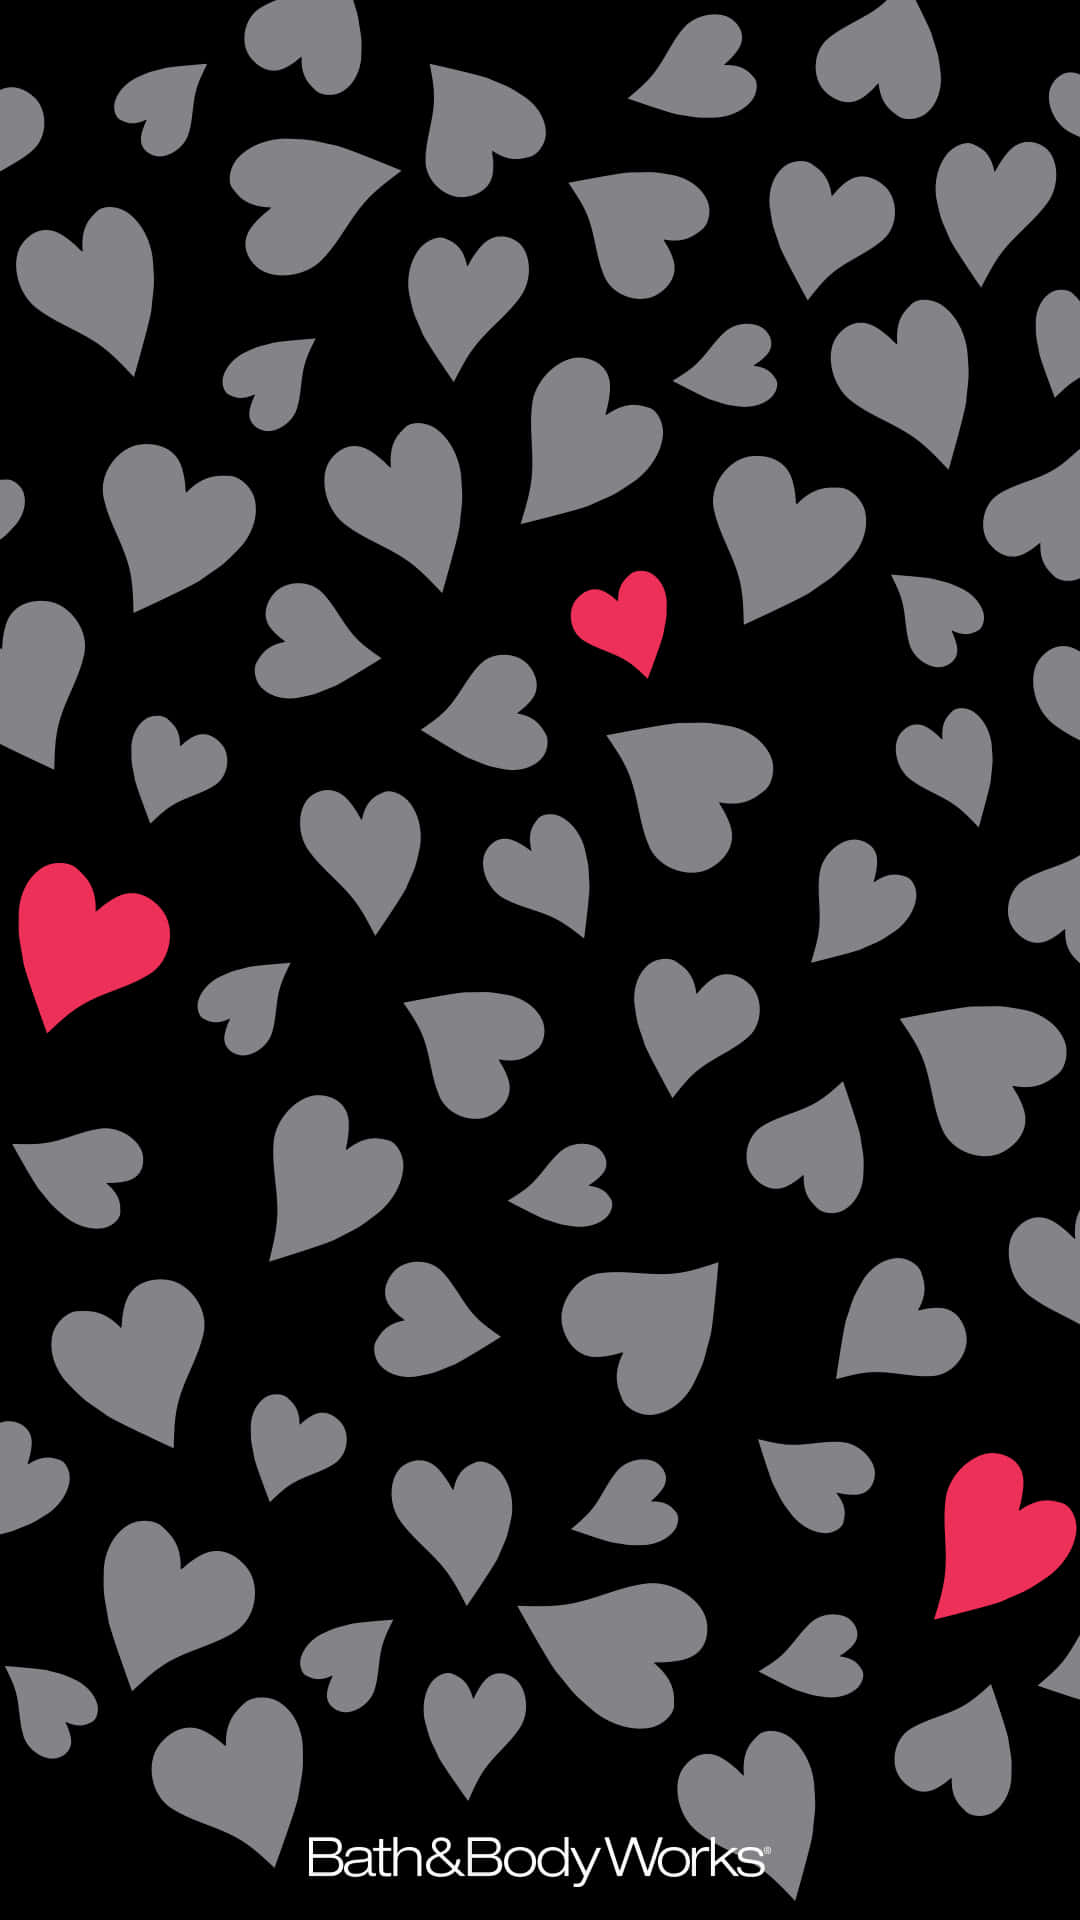 Free Black Heart Iphone Wallpaper Downloads, [100+] Black Heart Iphone  Wallpapers for FREE 